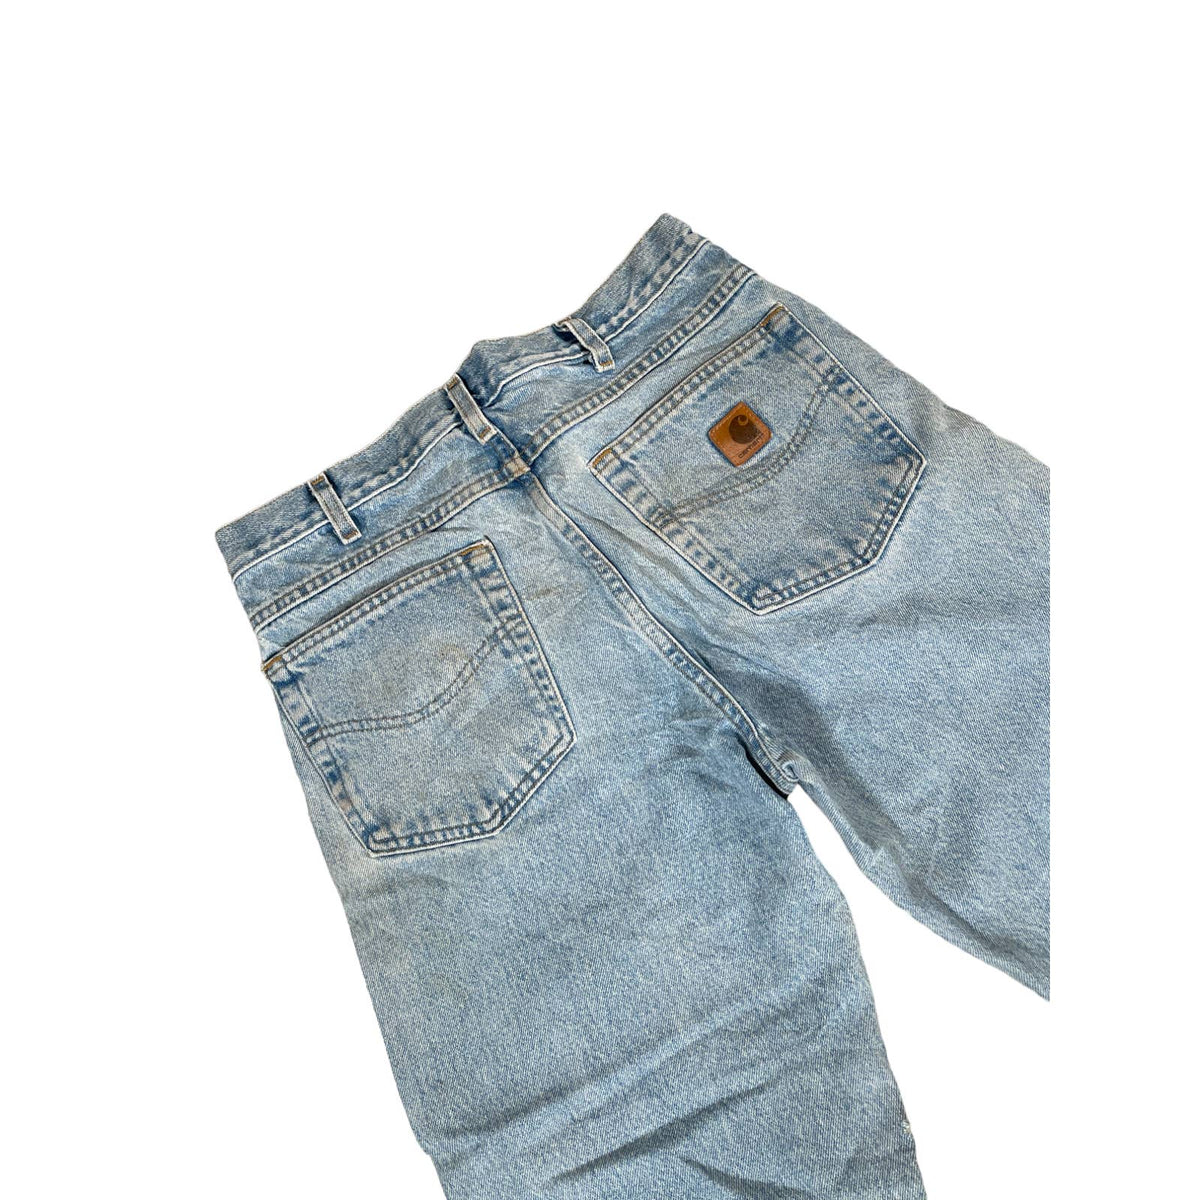 Vintage Carhartt Distressed Light Blue Denim Jeans 32x32